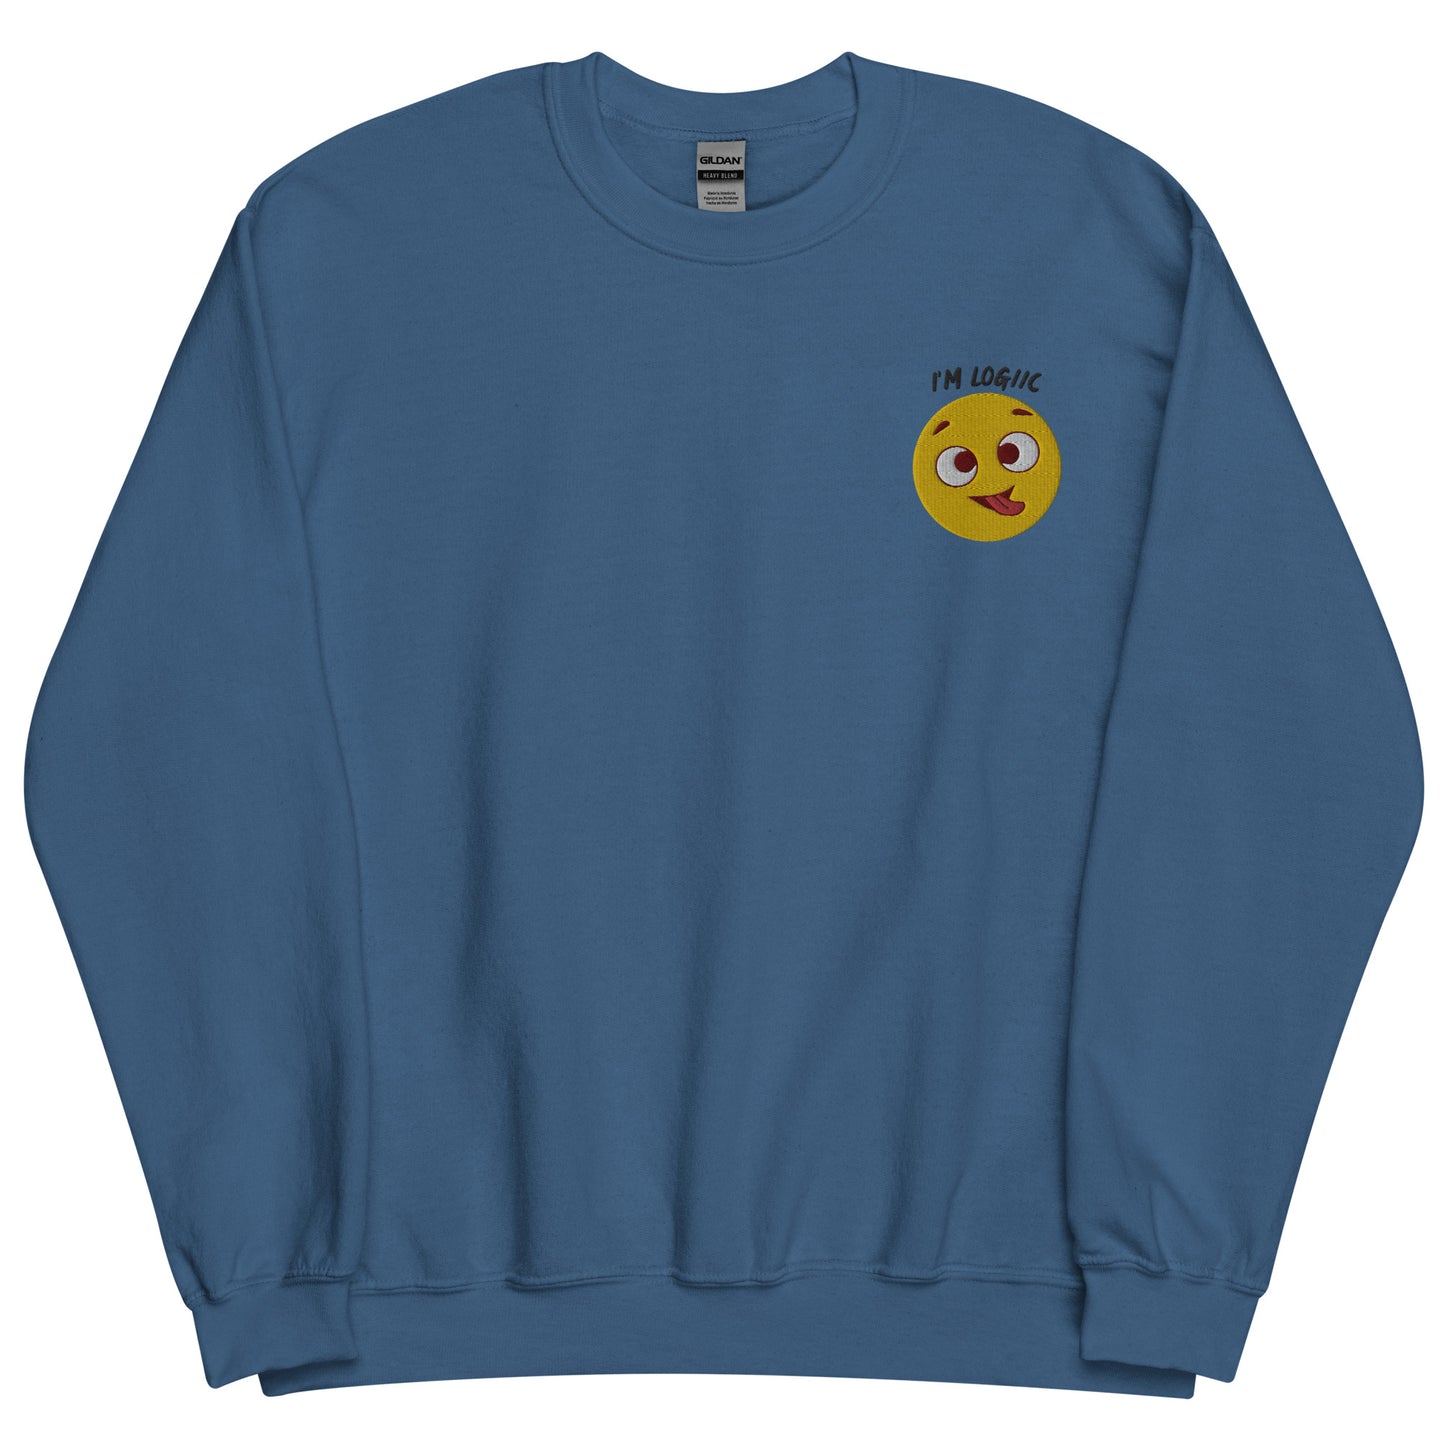 Silly Face Unisex Sweatshirt - Indigo Blue / S